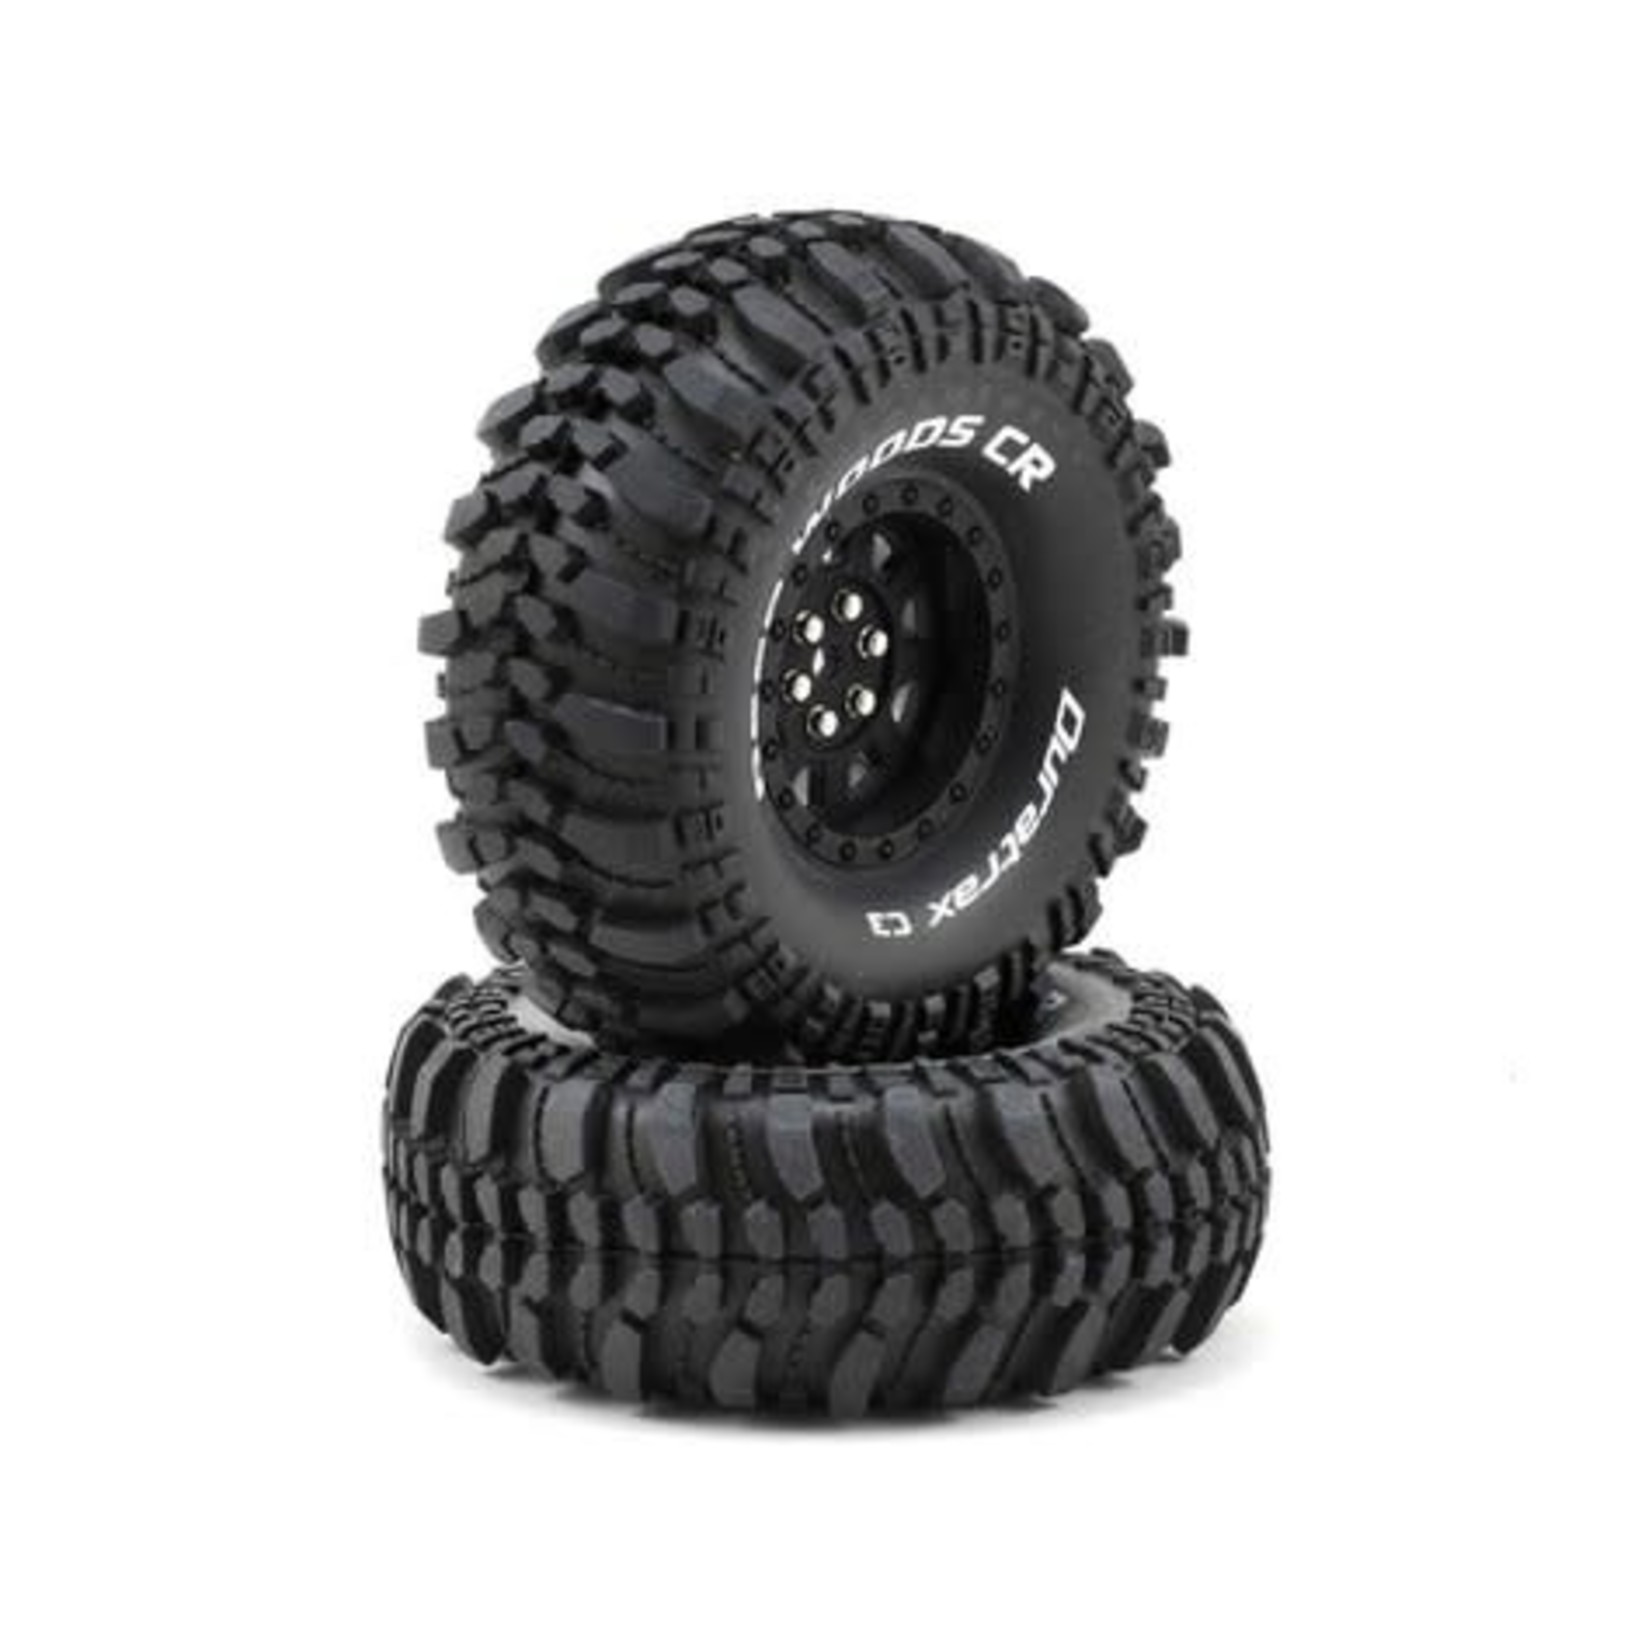 Duratrax DuraTrax Deep Woods CR 1.9" Pre-Mounted Crawler Tires (2) (Black) (C3 - Super Soft) #DTXC4026